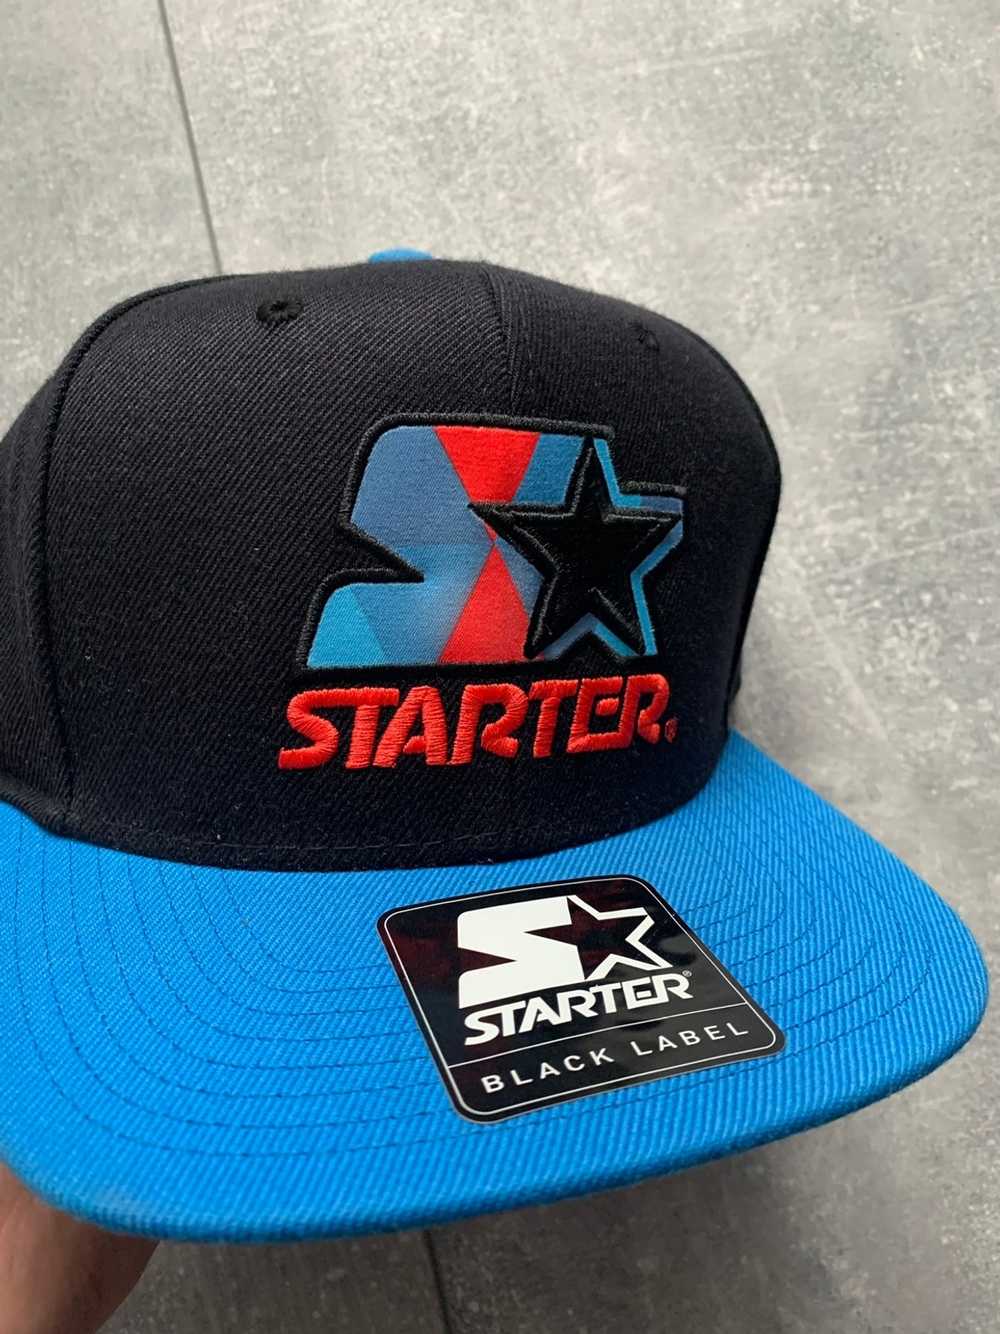 Gem new Starter - Starter Black cap label